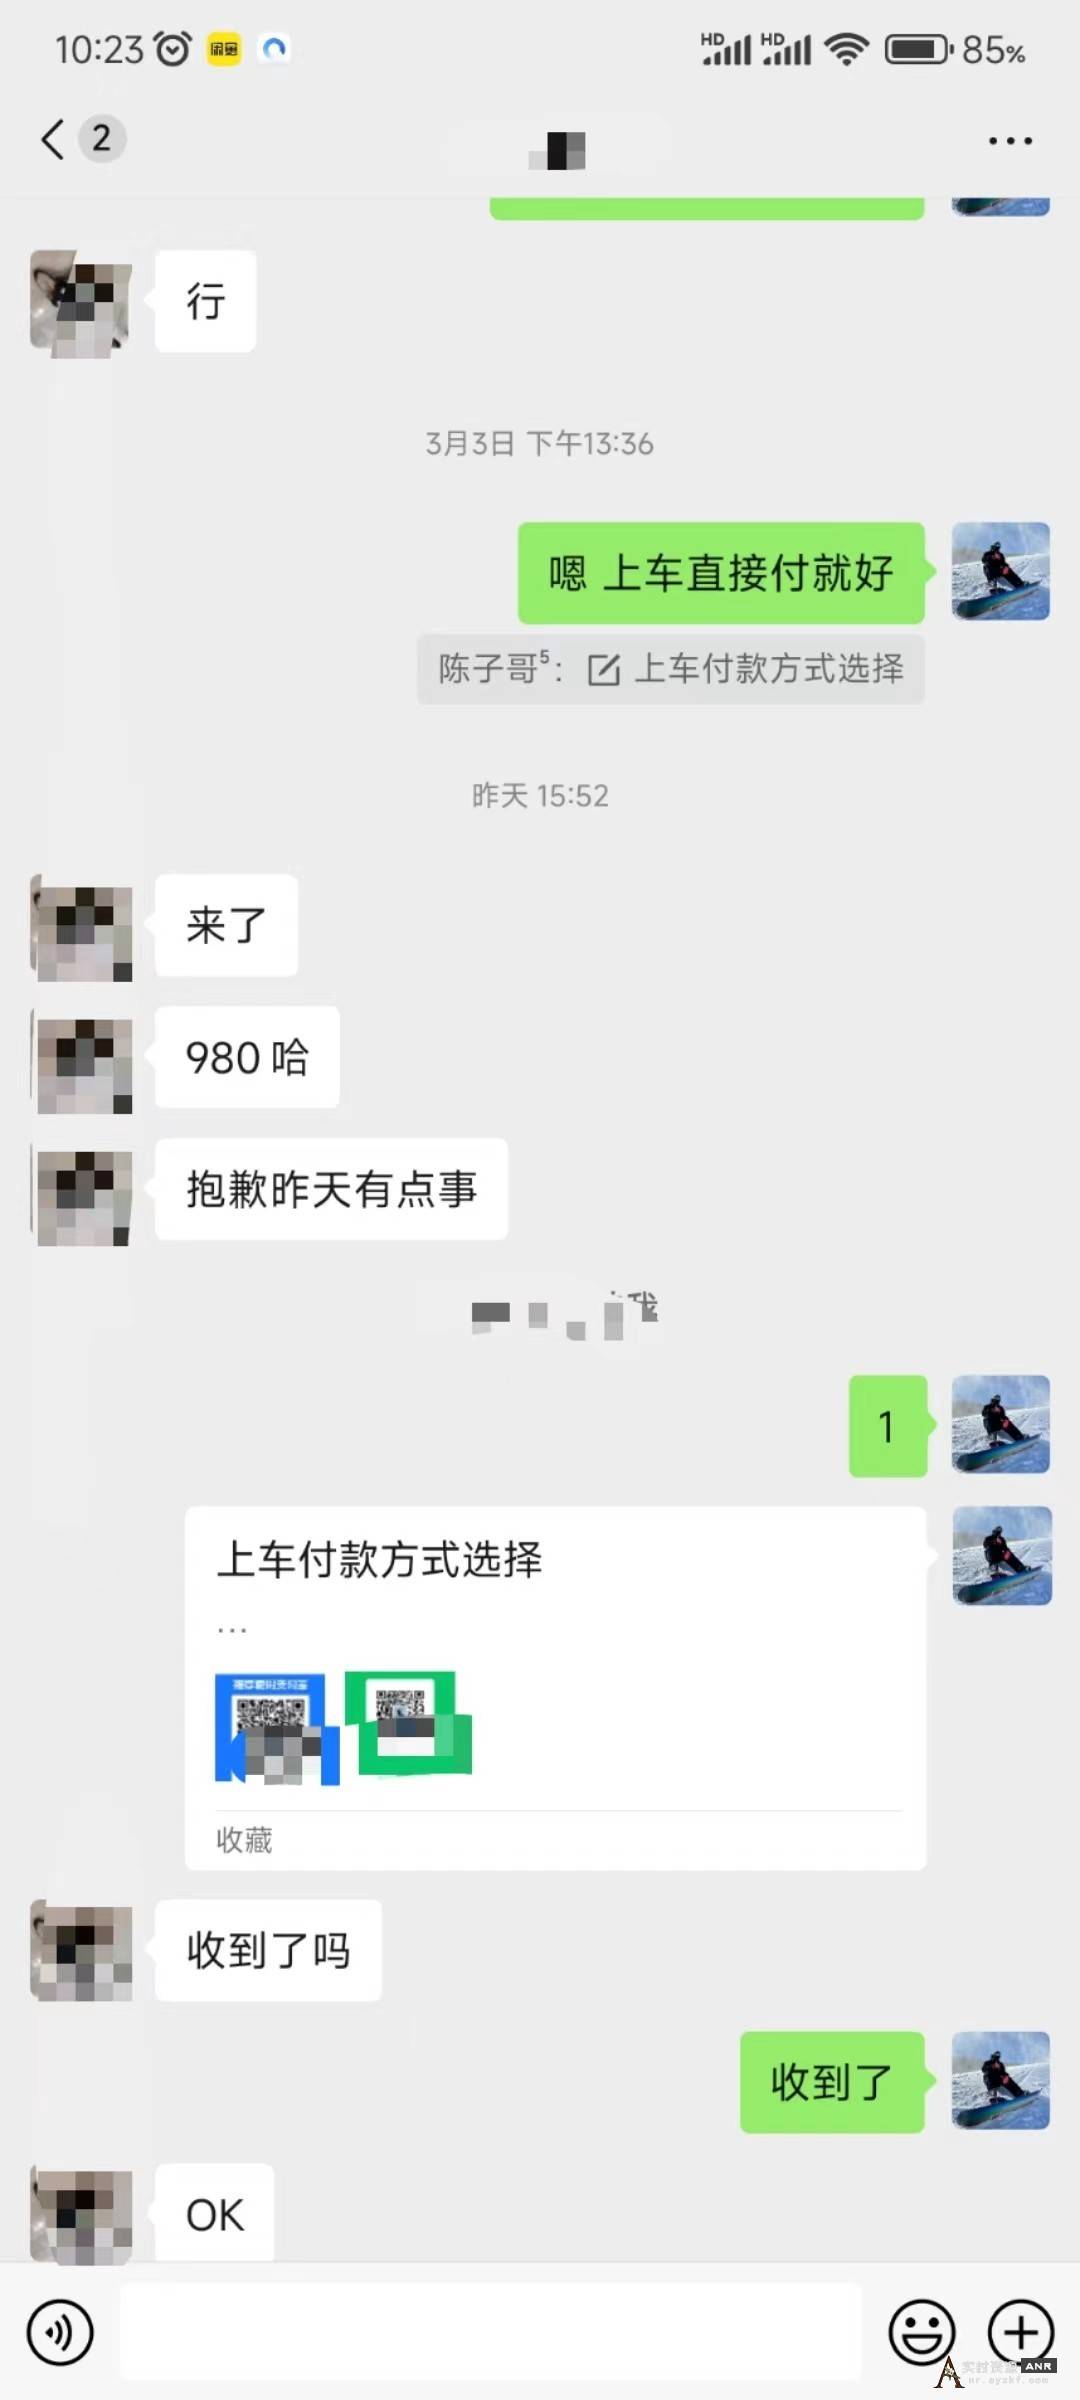 QQ无人直播 新赛道新玩法 一天轻松500+ 腾讯官方流量扶持 网络资源 图2张